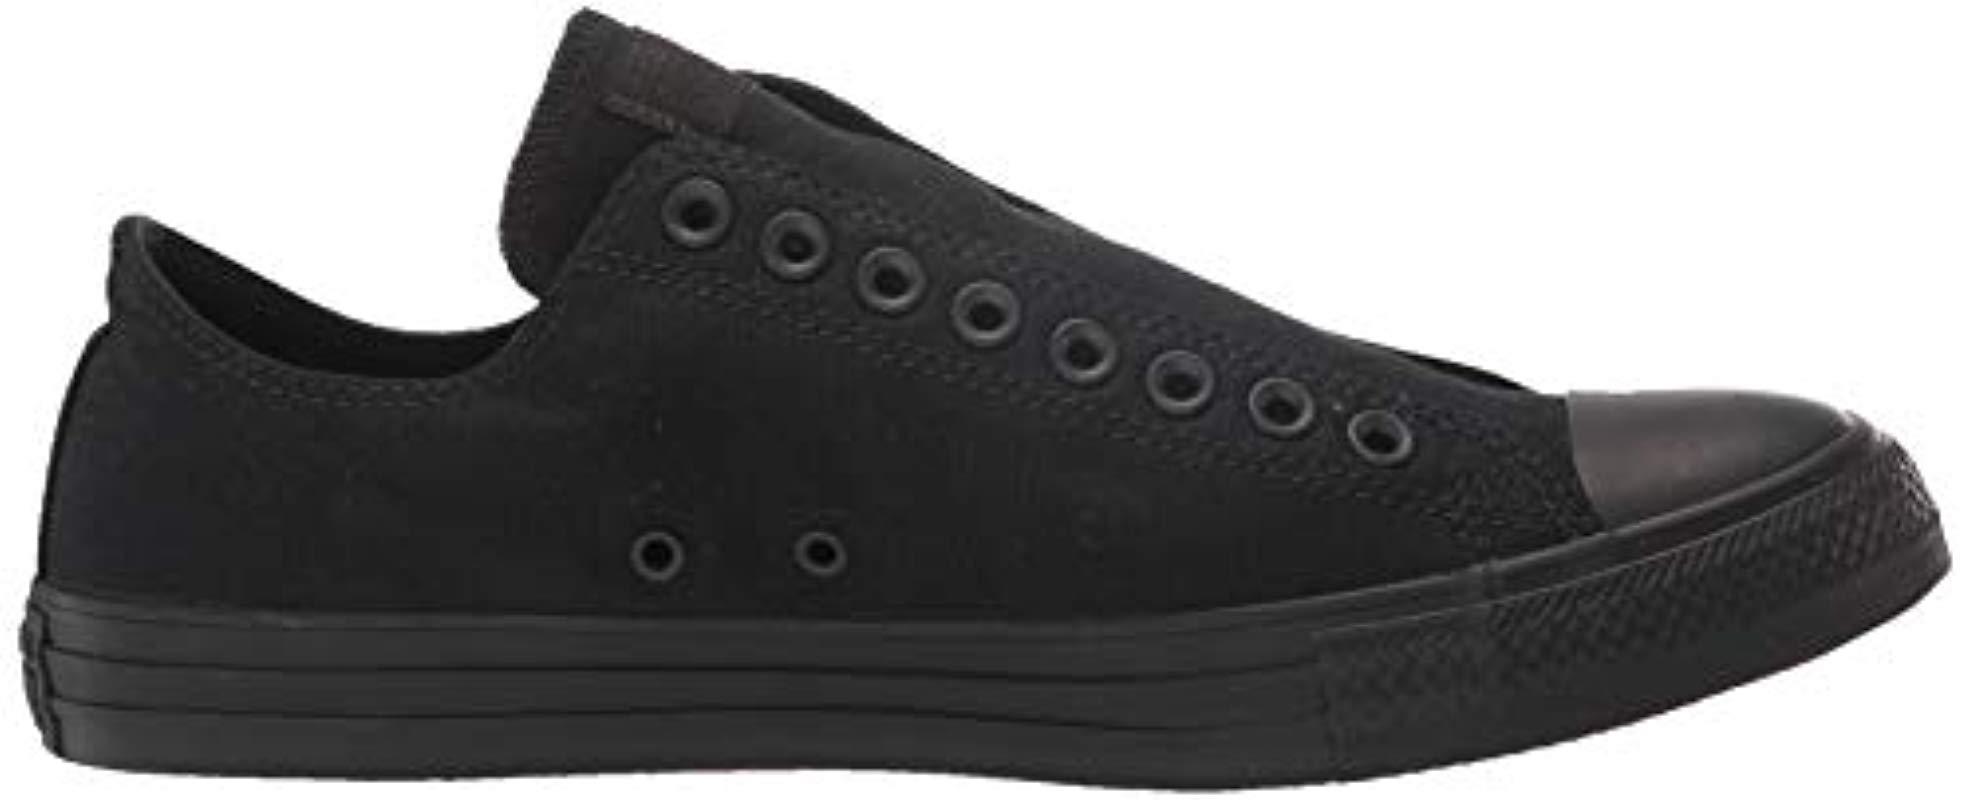 Converse Canvas Chuck Taylor All Star Slip Sneaker in Black/Black/Black ...